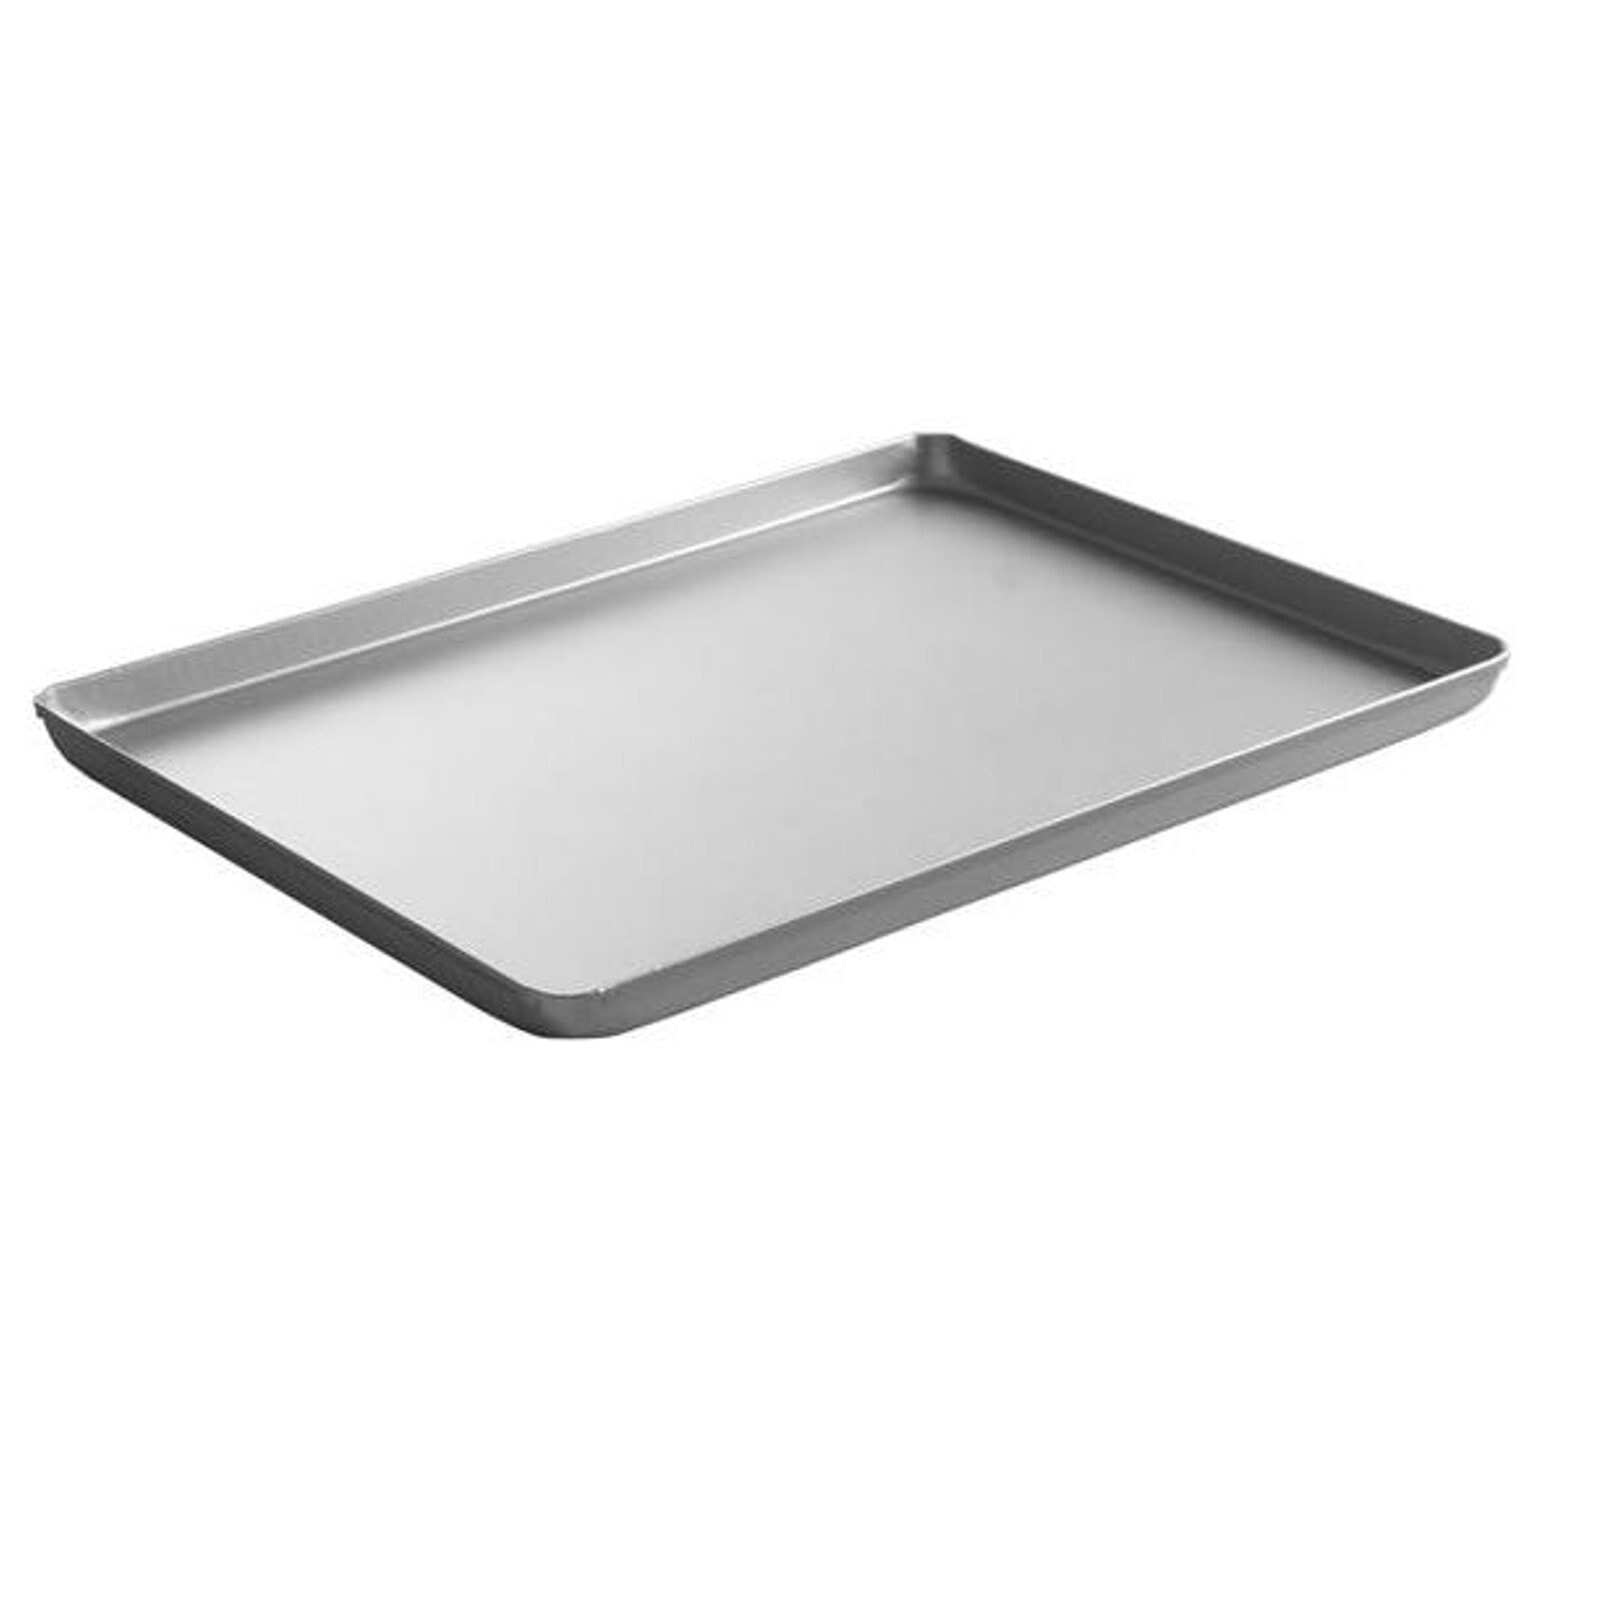 Display baking tray aluminum 600x400x20mm silver - Hendi 808511